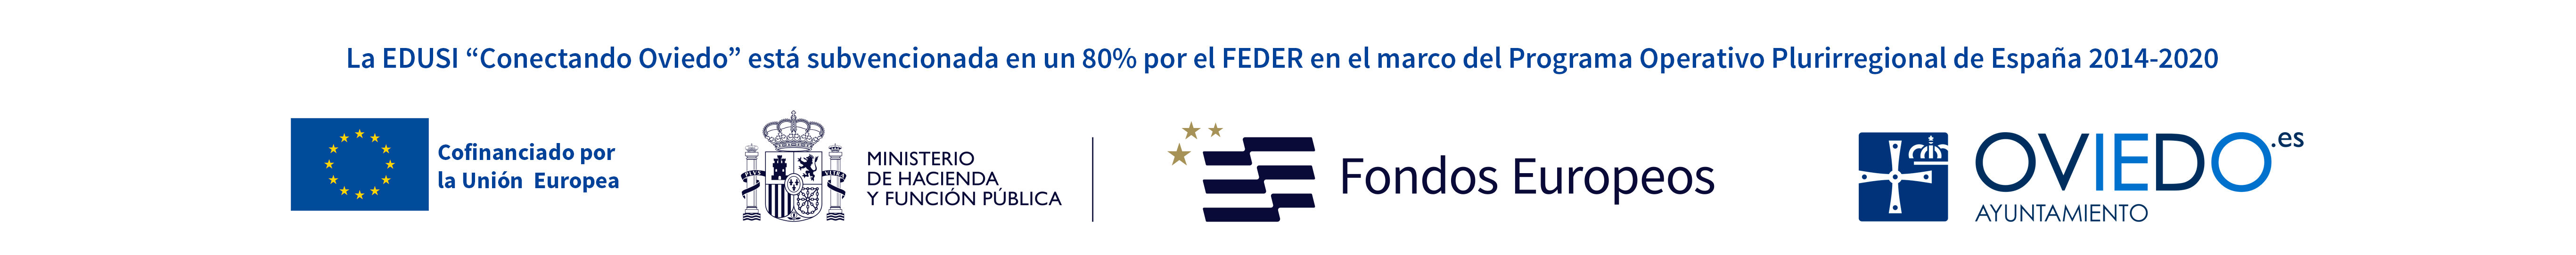 FEDER-layout set logo2